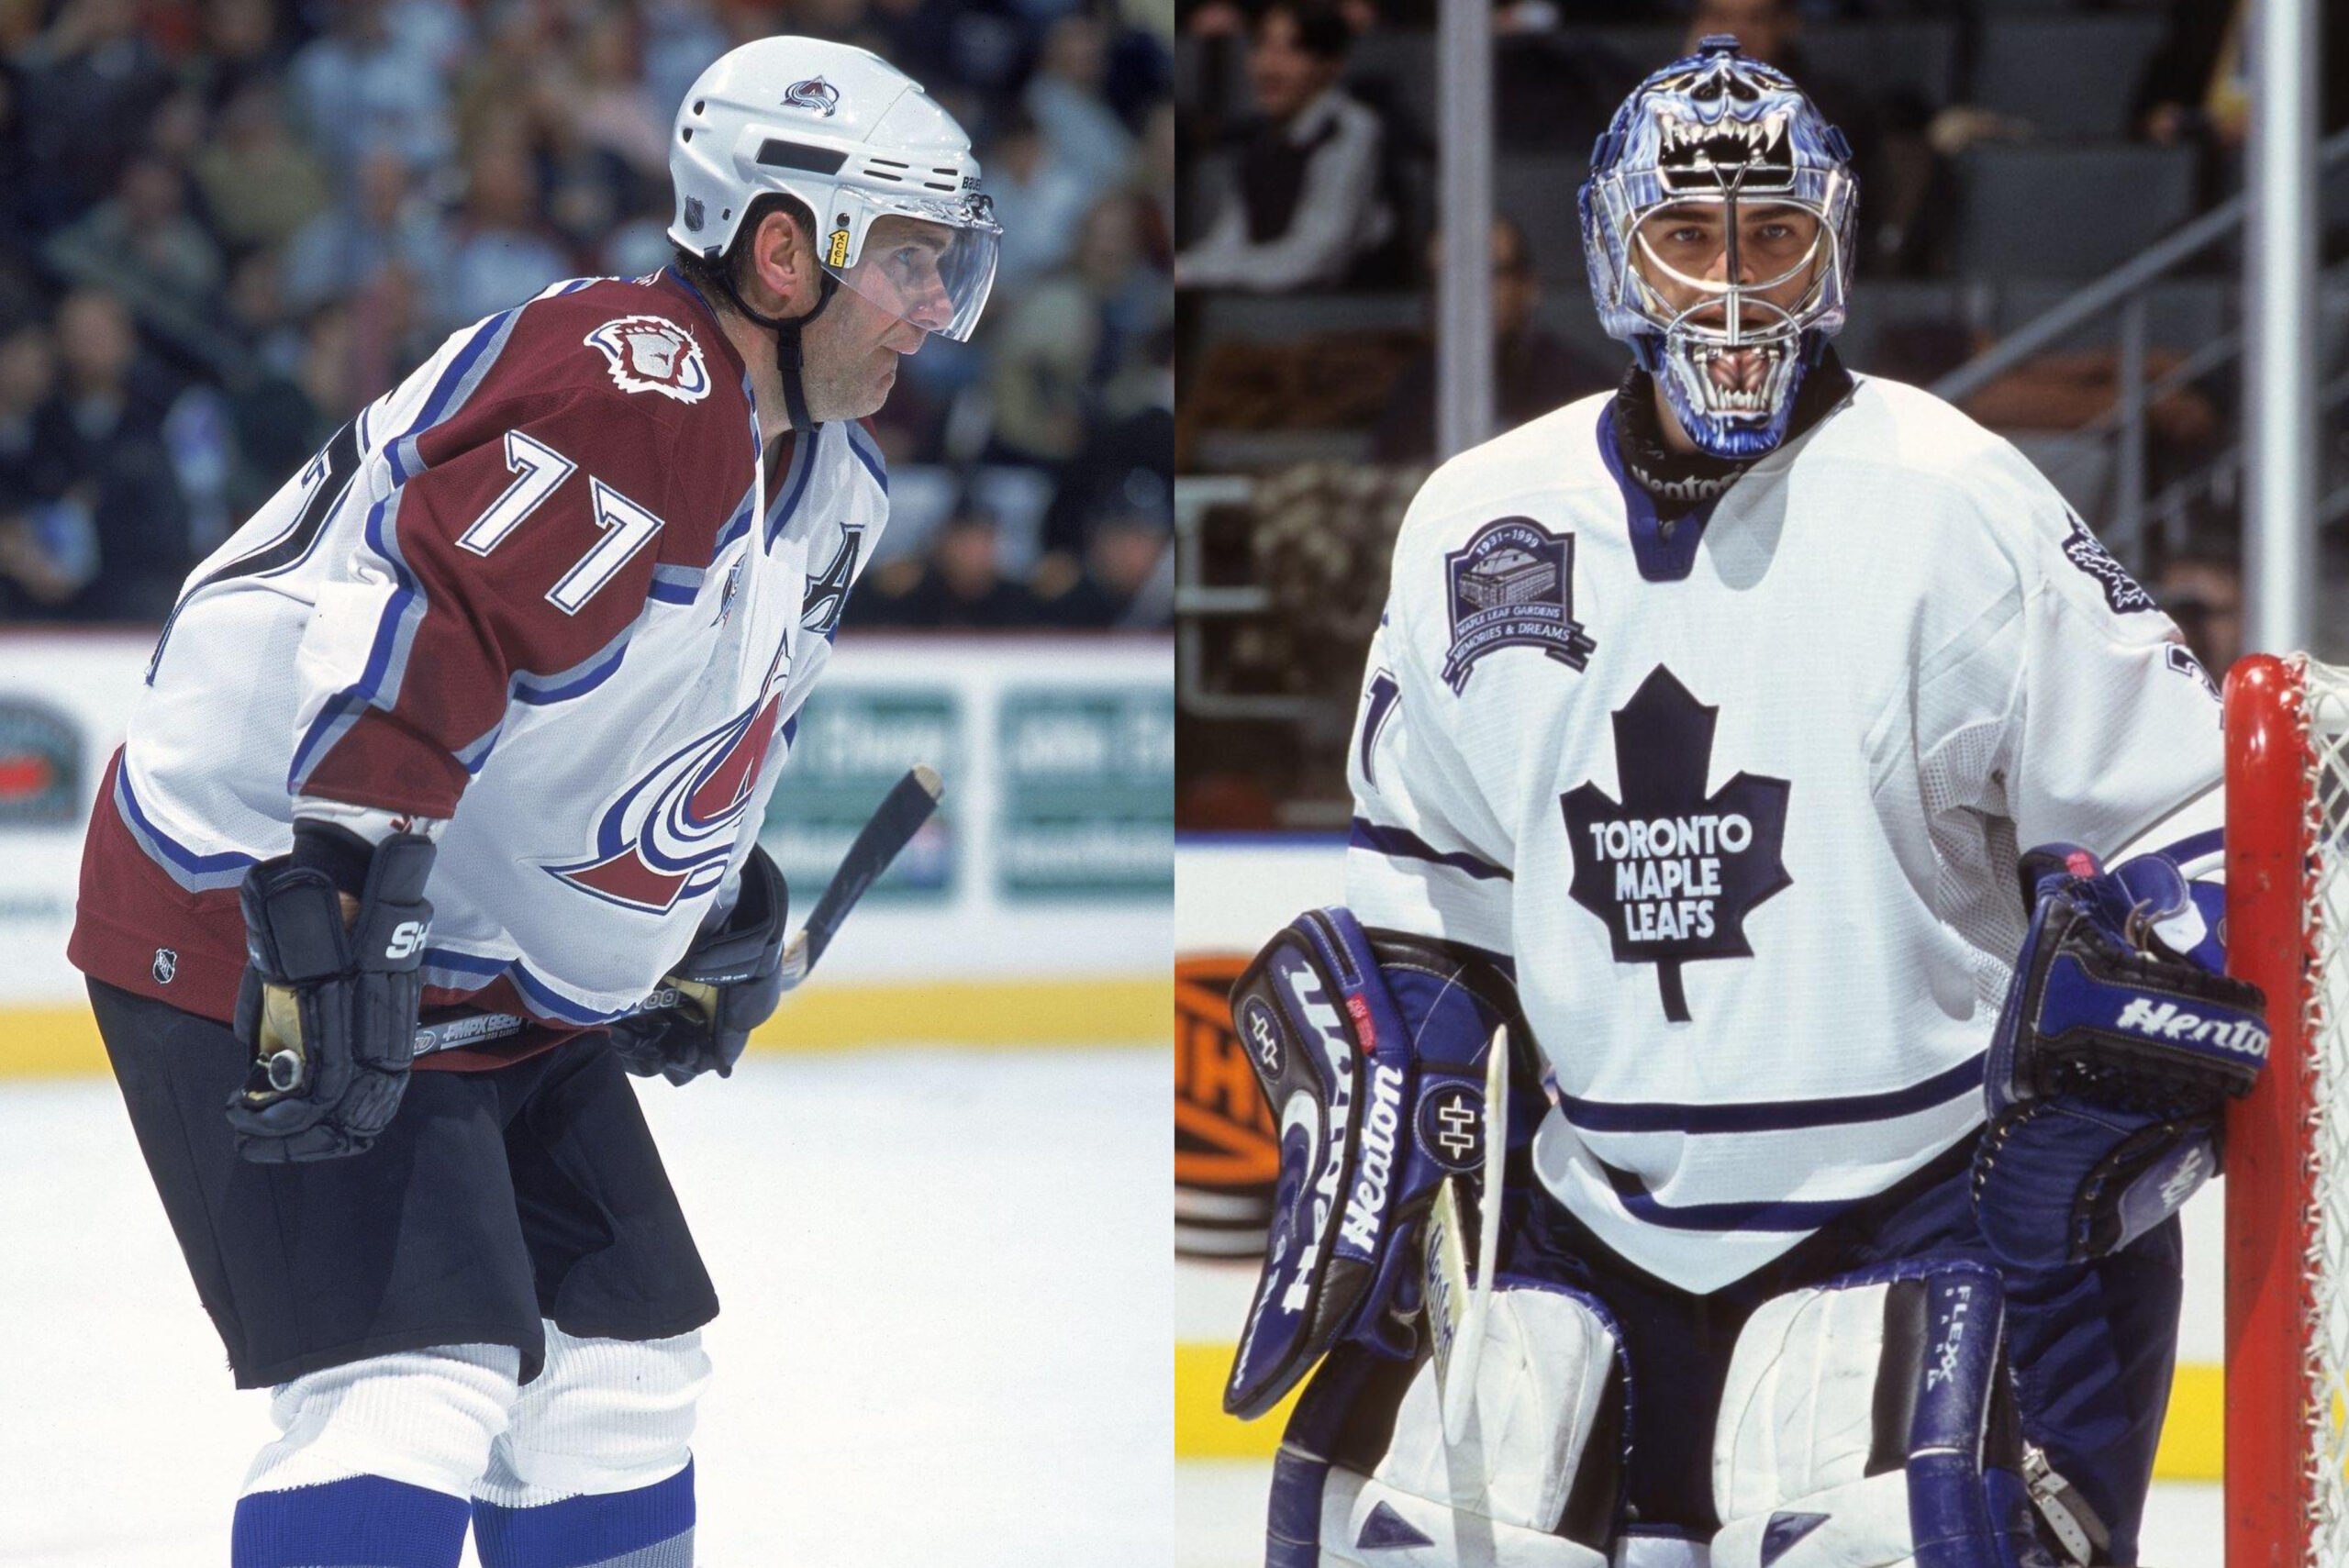 Best NHL jerseys of all time headlined by Blackhawks, Canadiens, Kings